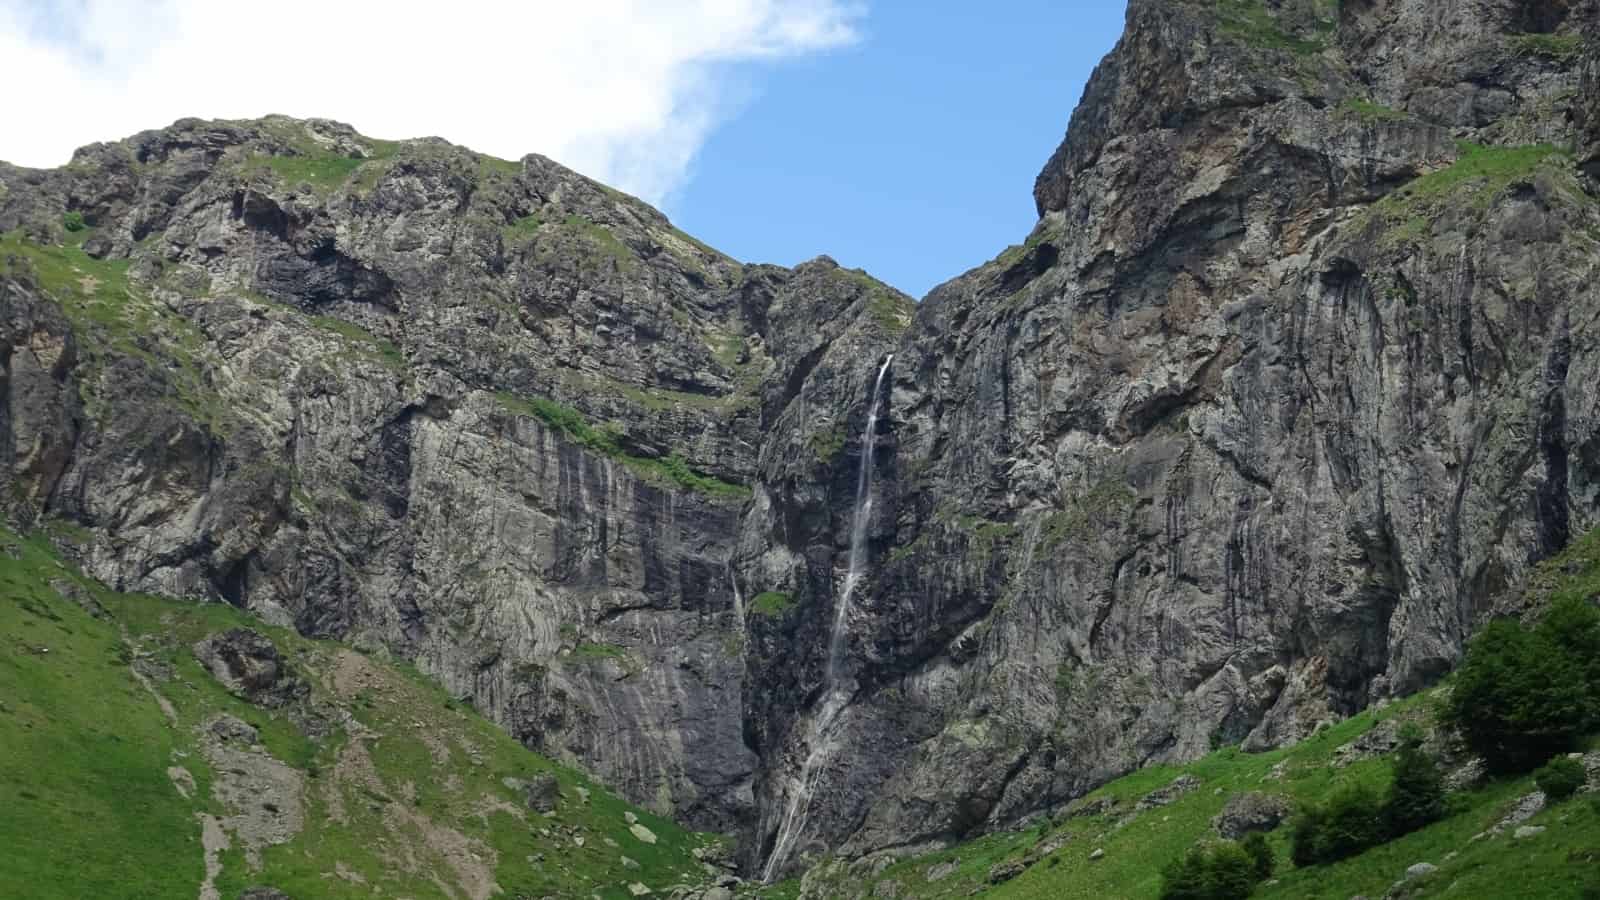 Rayskoto praskalo waterfall - photo: Central Balkan National Park